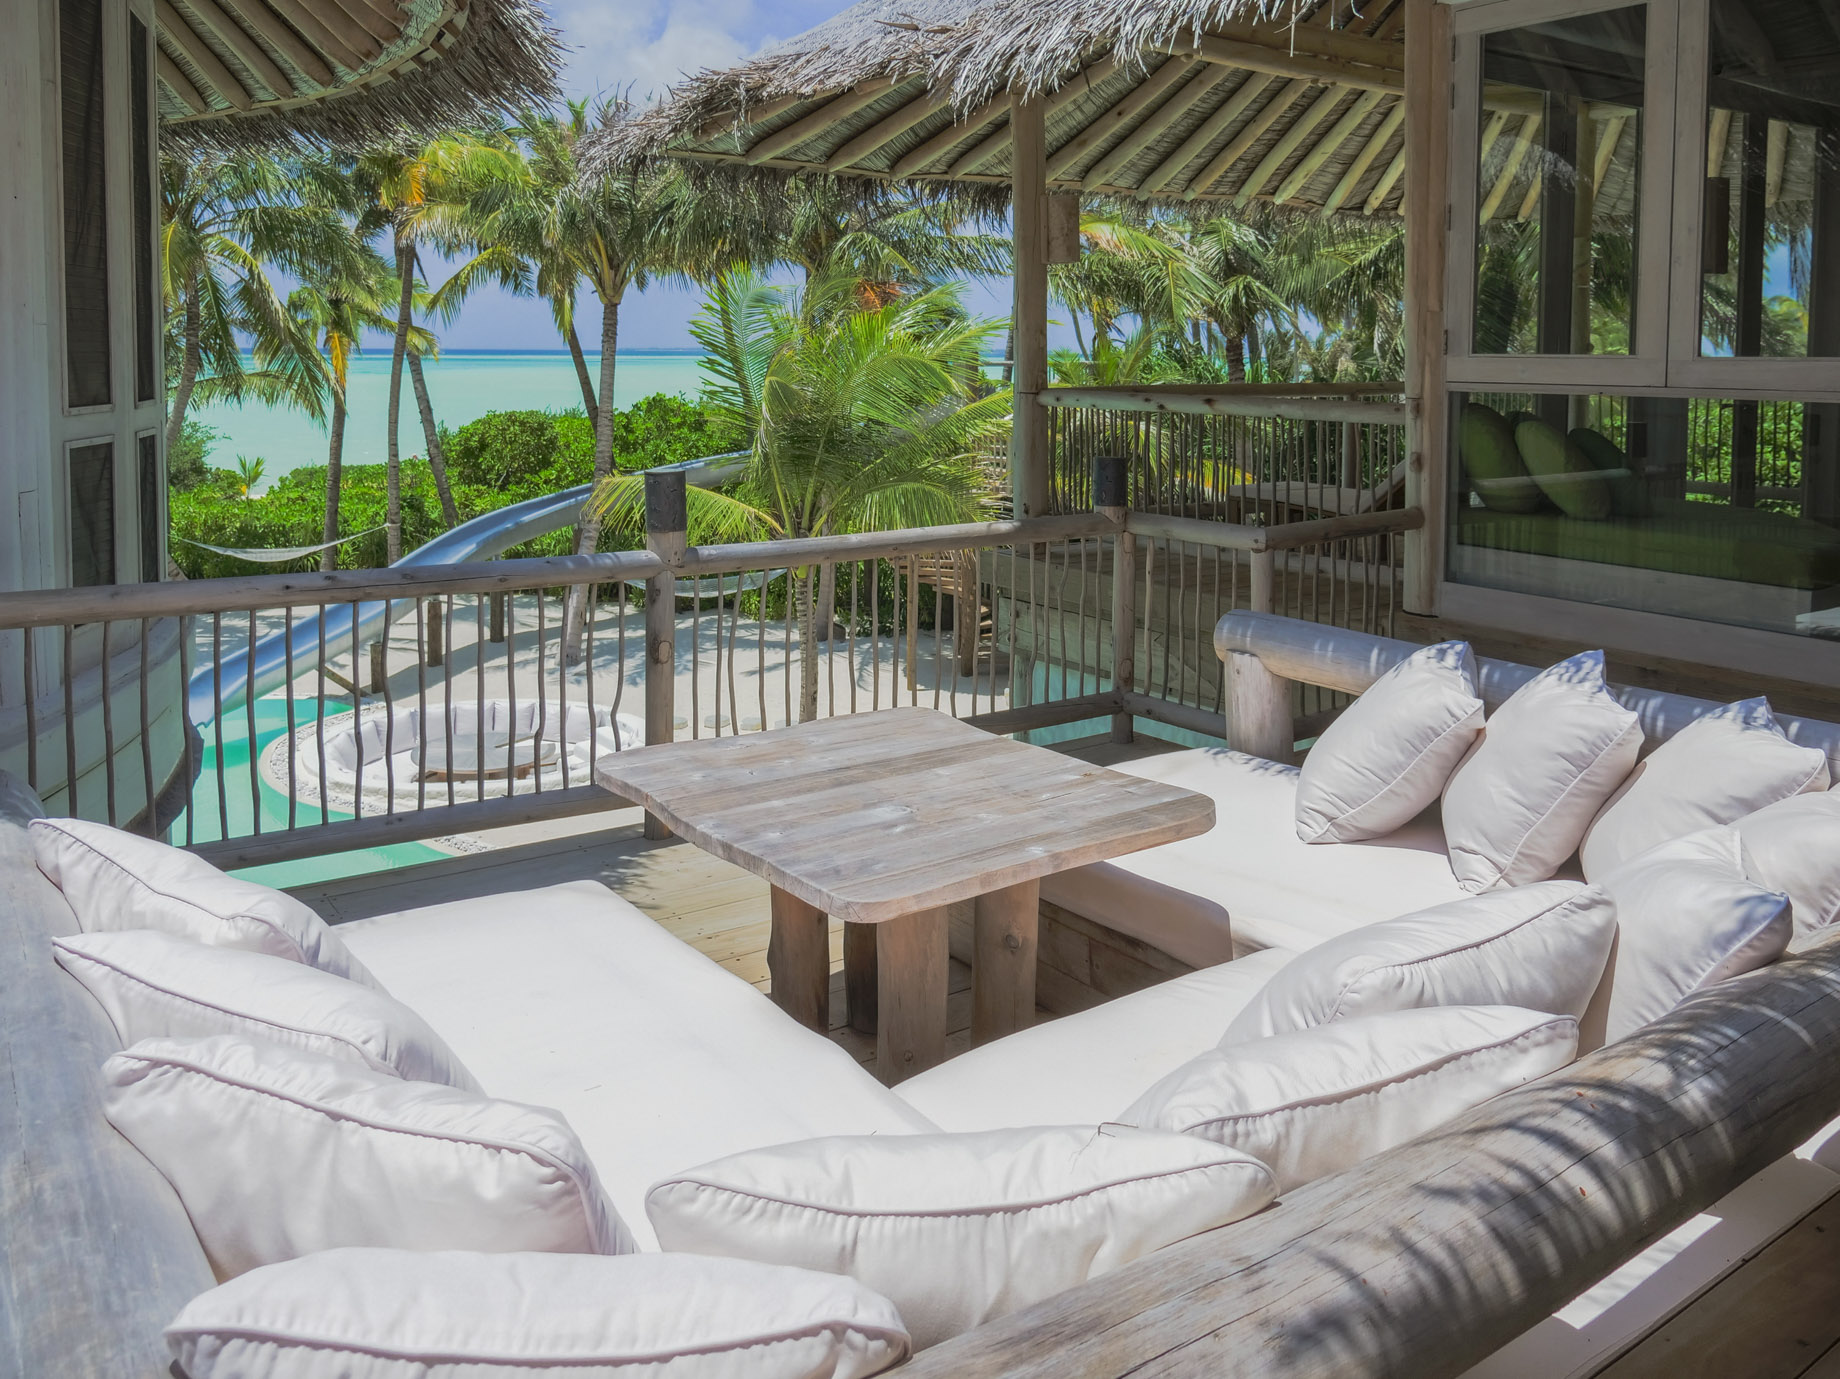 Soneva Jani Resort – Noonu Atoll, Medhufaru, Maldives – 4 Bedroom Island Reserve Villa Upper Deck Ocean View